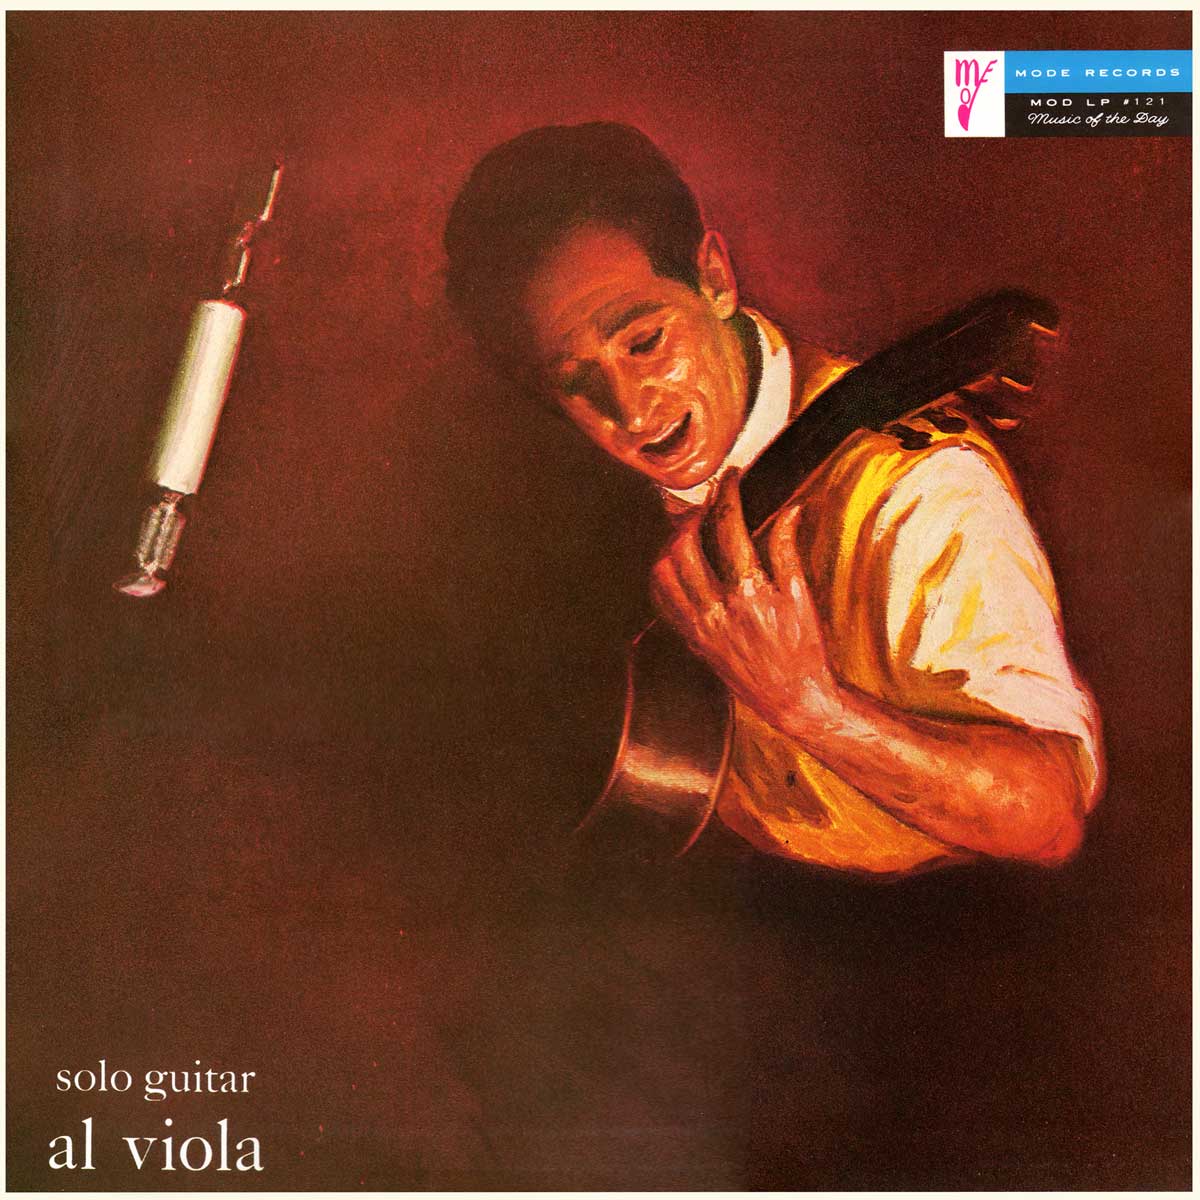 Al Viola - Solo Guitar - Front cover